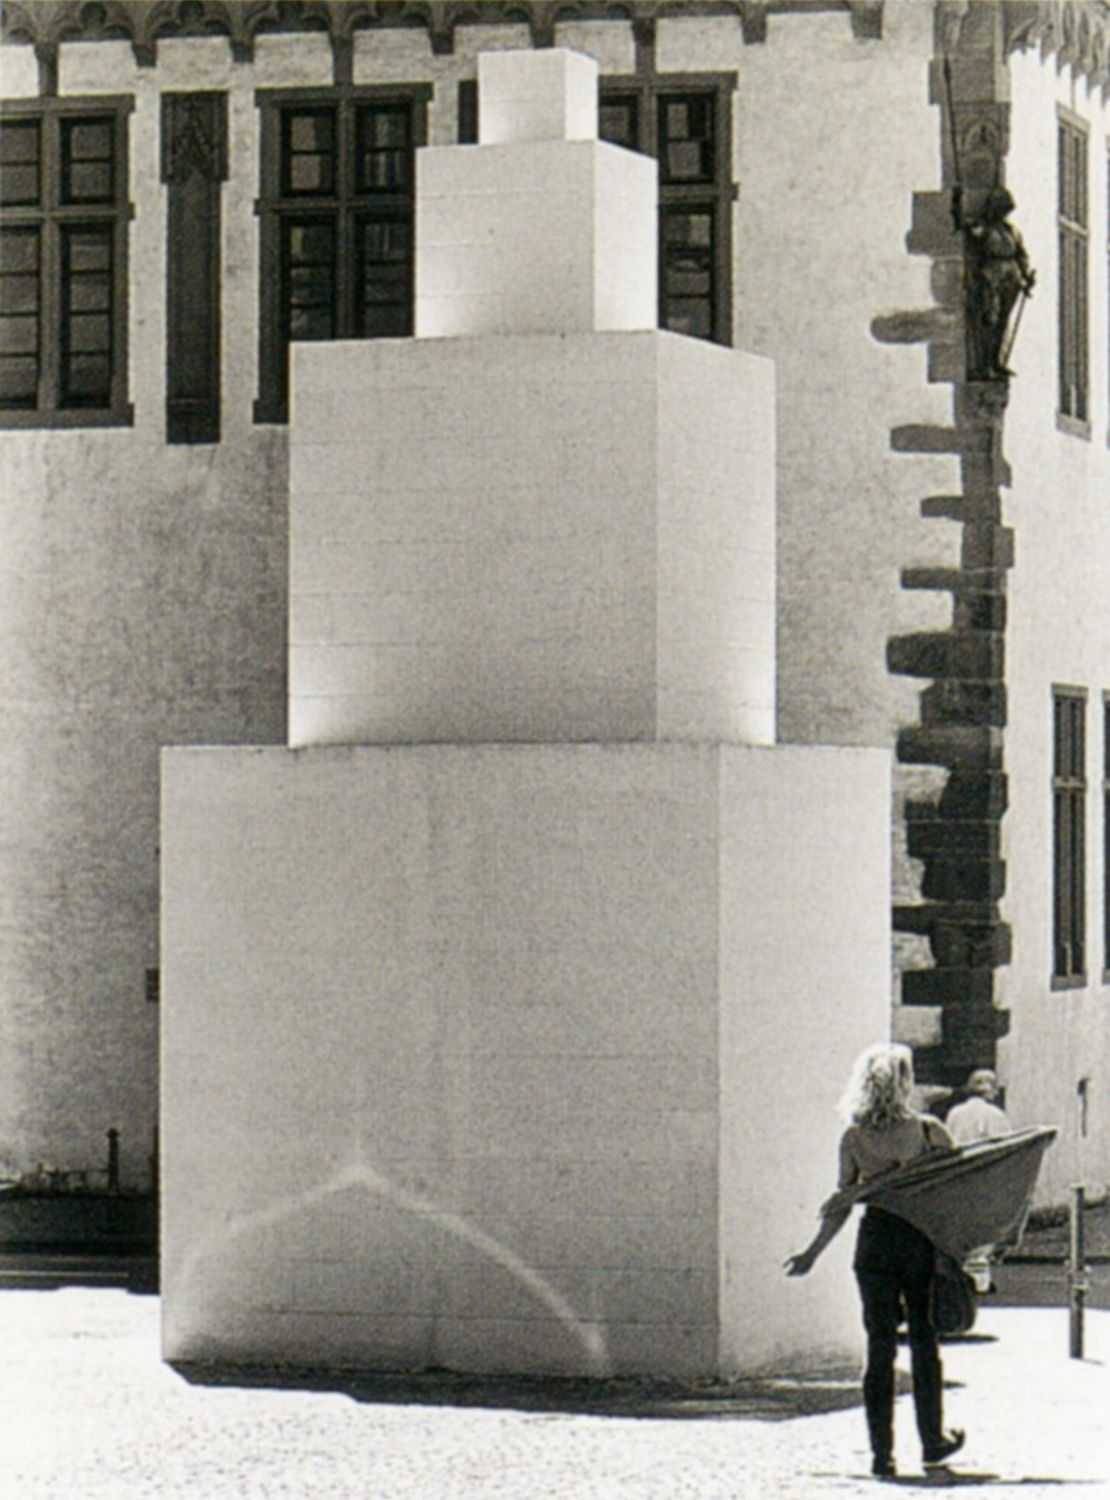 "Tower" (1990) by Sol LeWitt, on view in Frankfurt